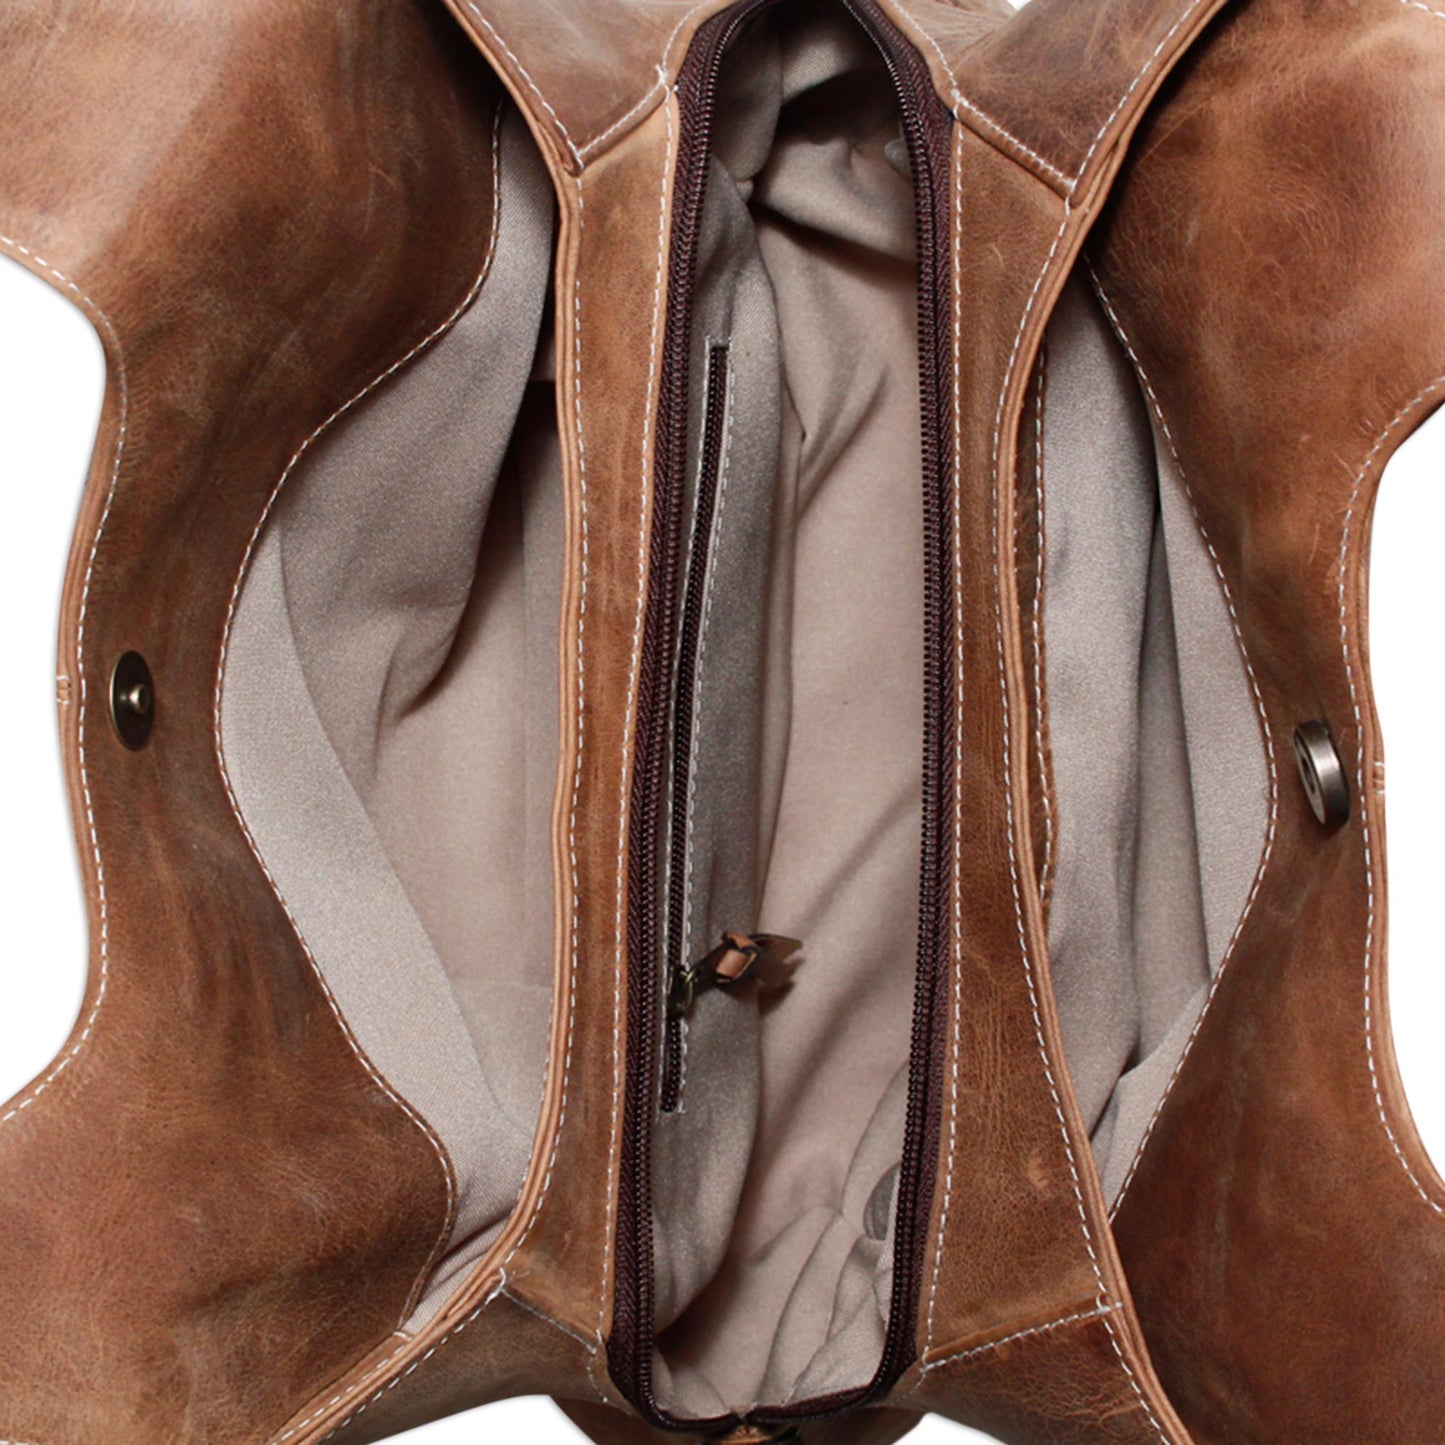 Urban Caramel Brown Leather Hobo Handbag